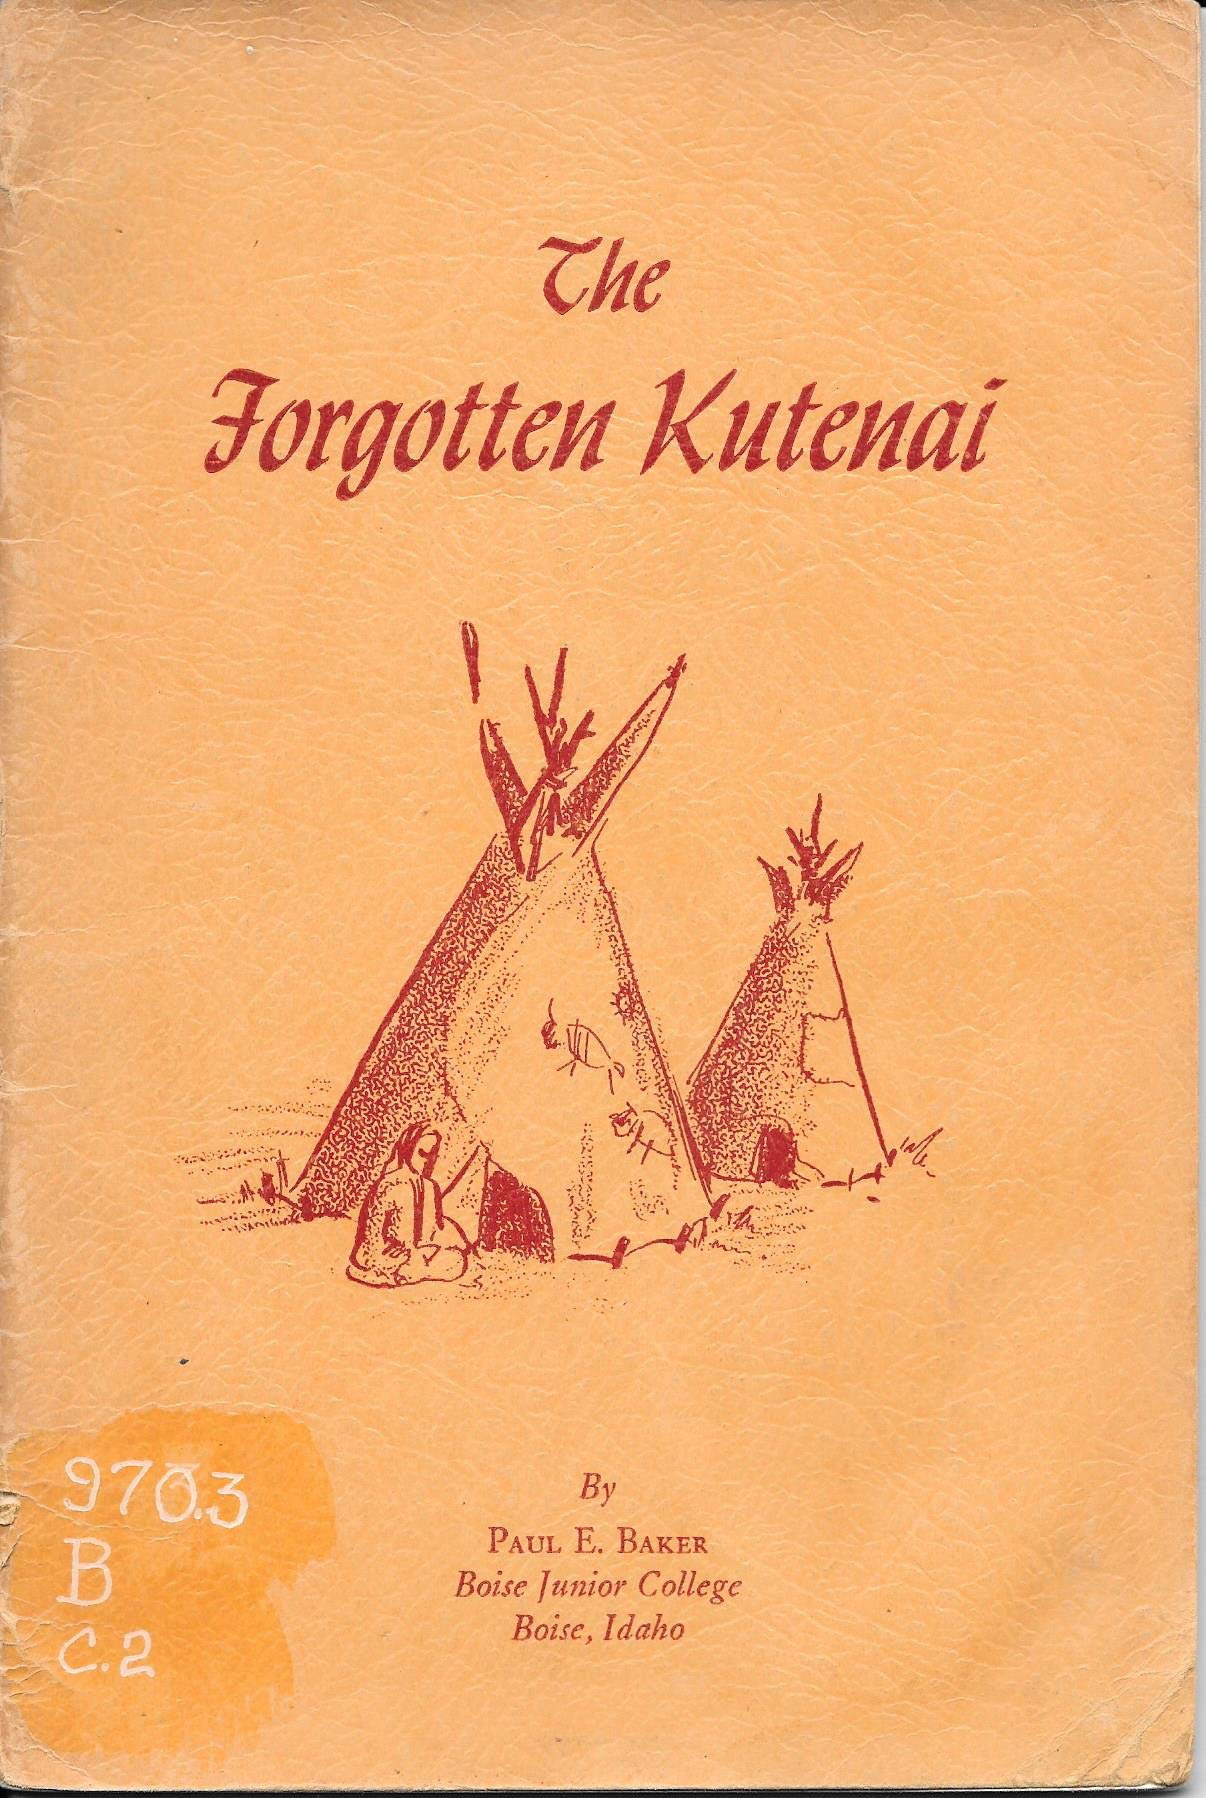 The forgotten Kutenai: A study of the Kutenai Indians, Bonners Ferry, Idaho, Creston, British Columbia, Canada, and other areas in British Columbia where the Kutenai are located (book cover)